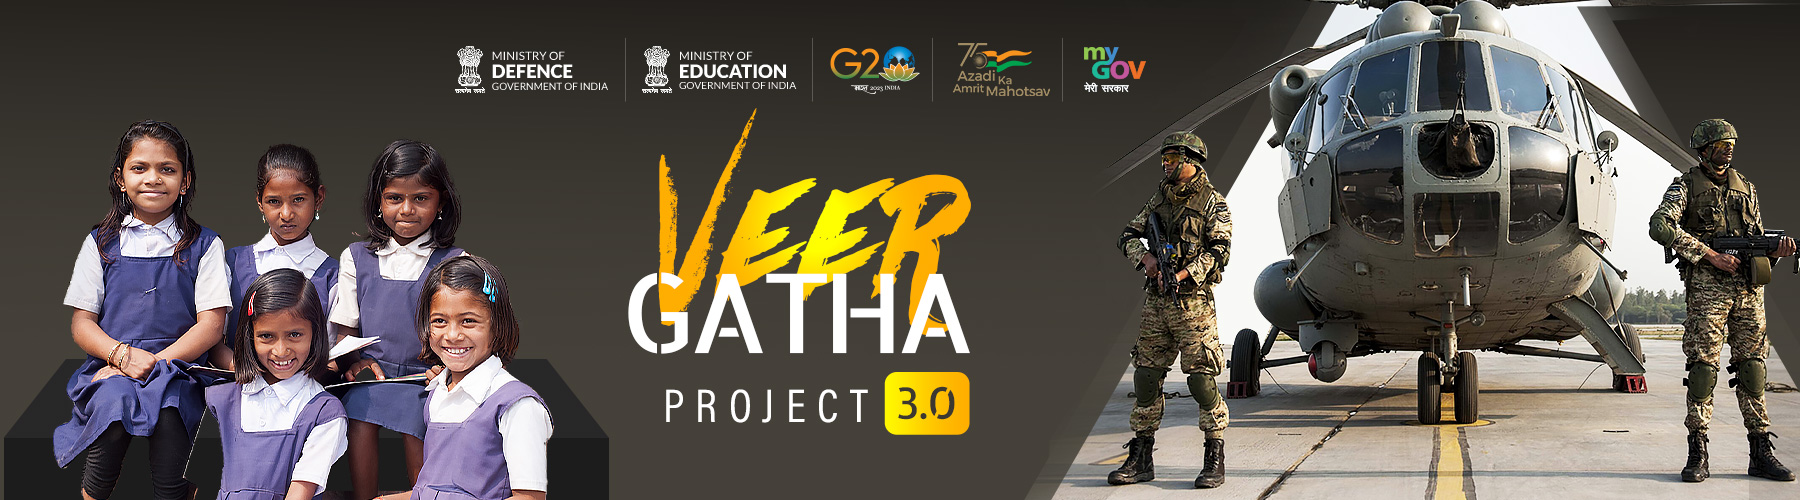 Veer Gatha 3.0